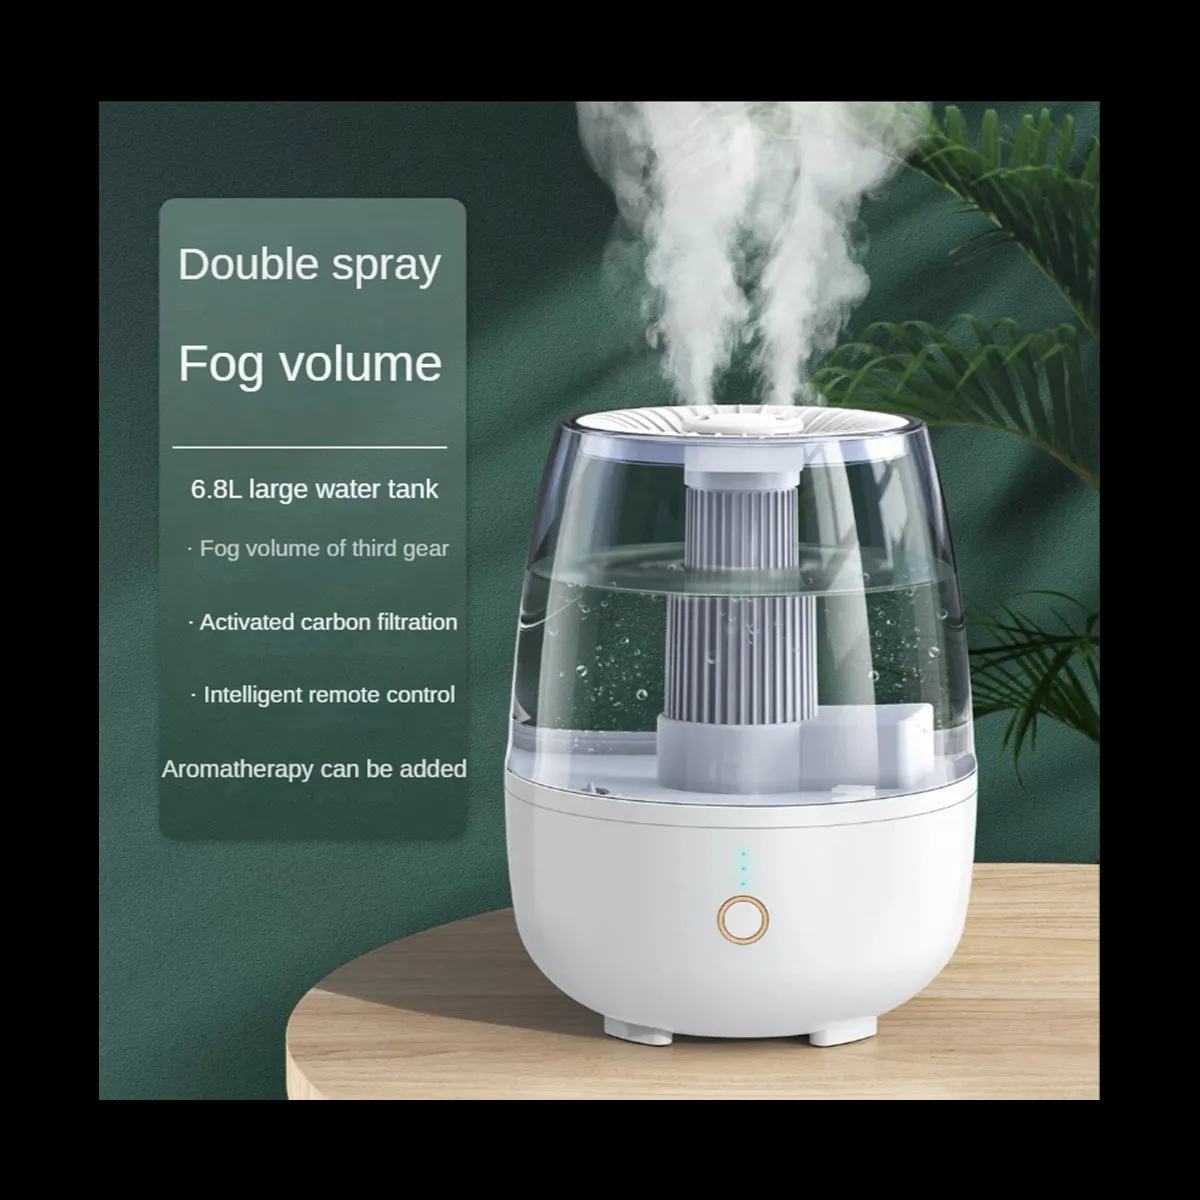 Aquaoasis Cool Mist Humidifier 6.8L Double Spray Capacity